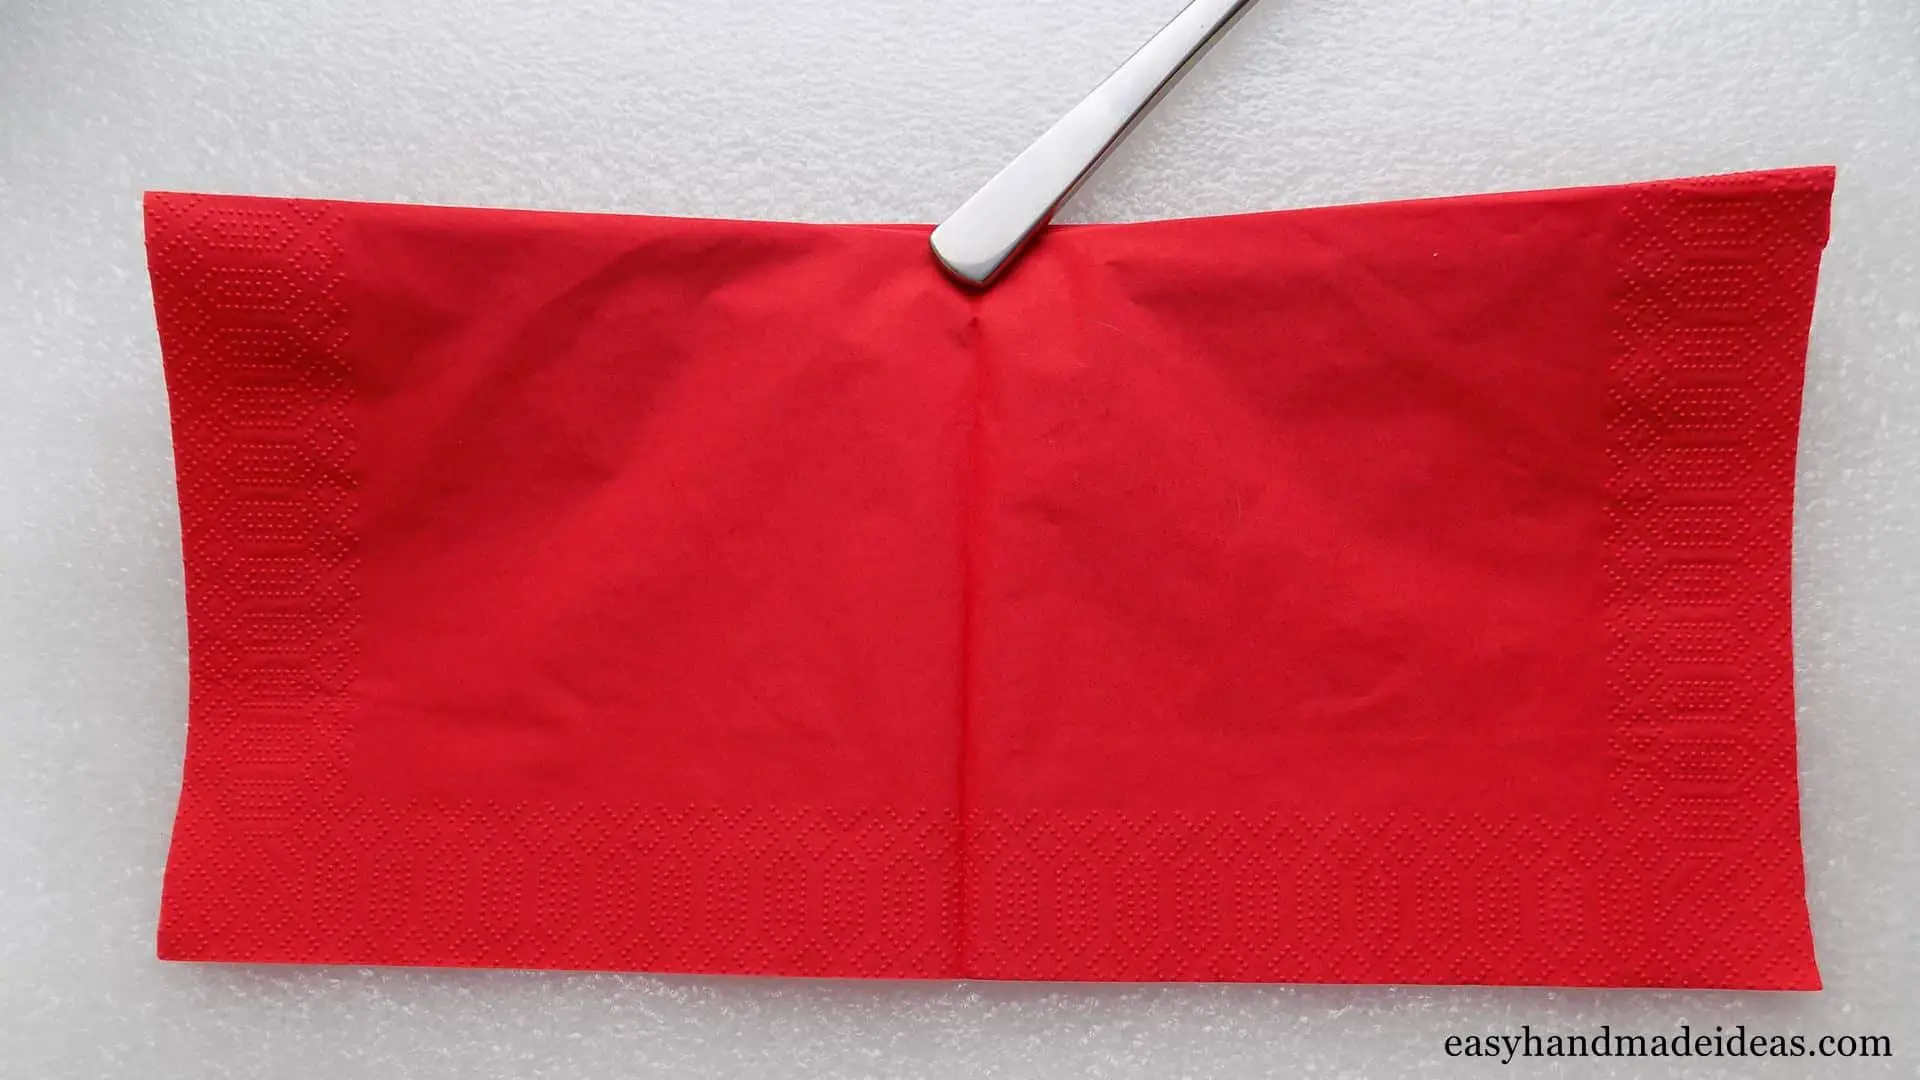 Upside-down red napkin